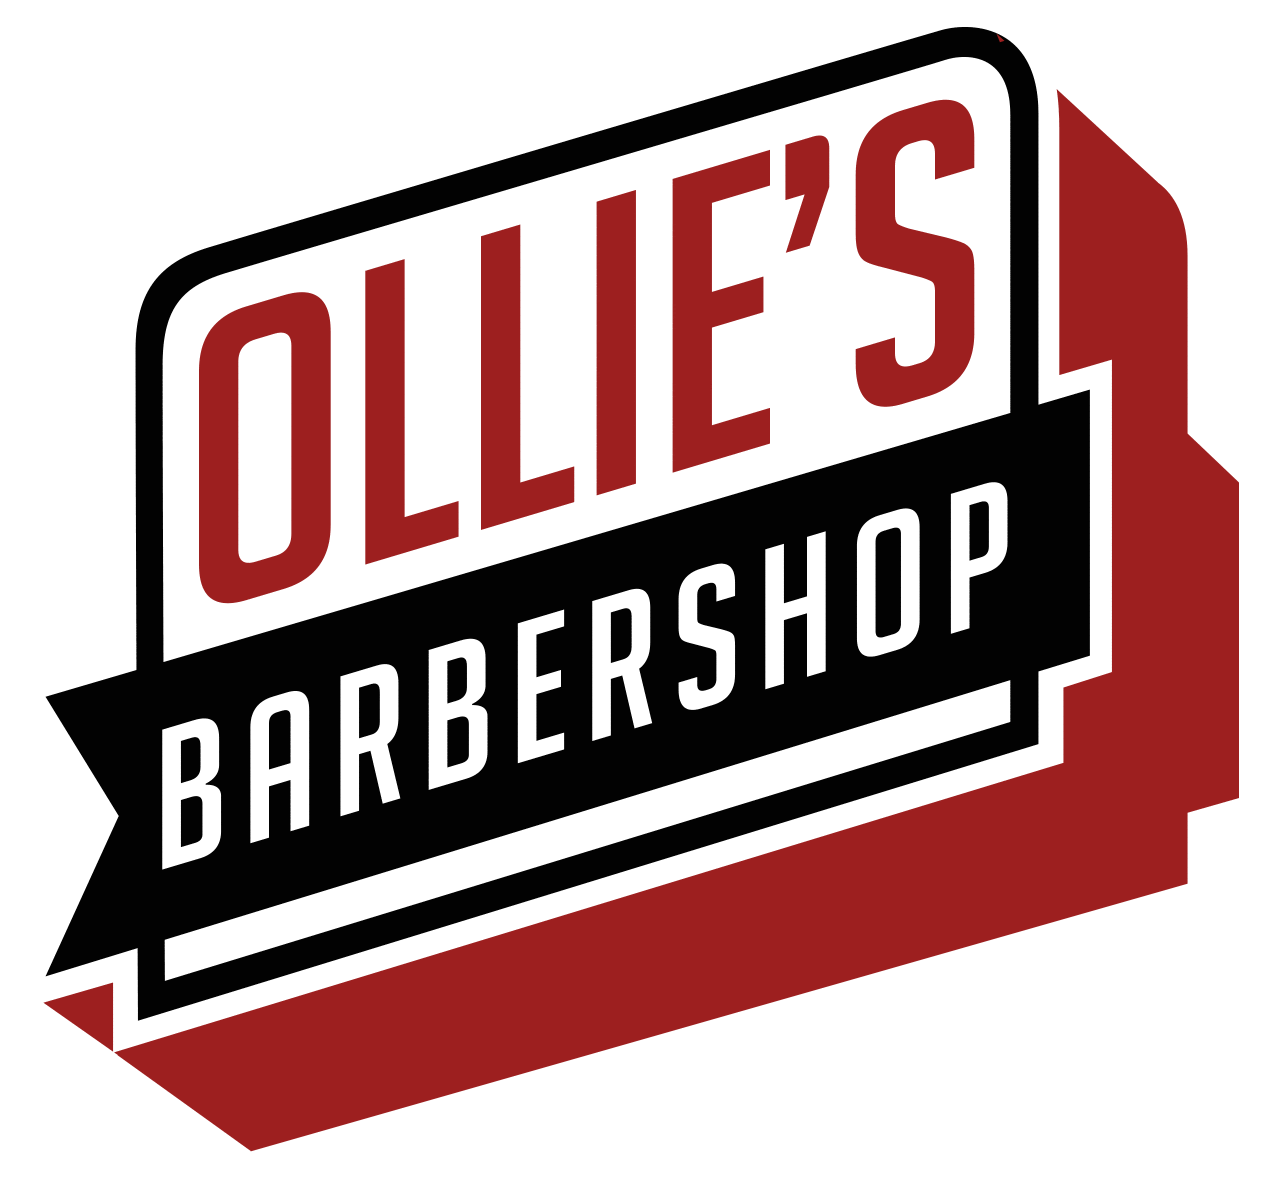 www.olliesbarbershop.com